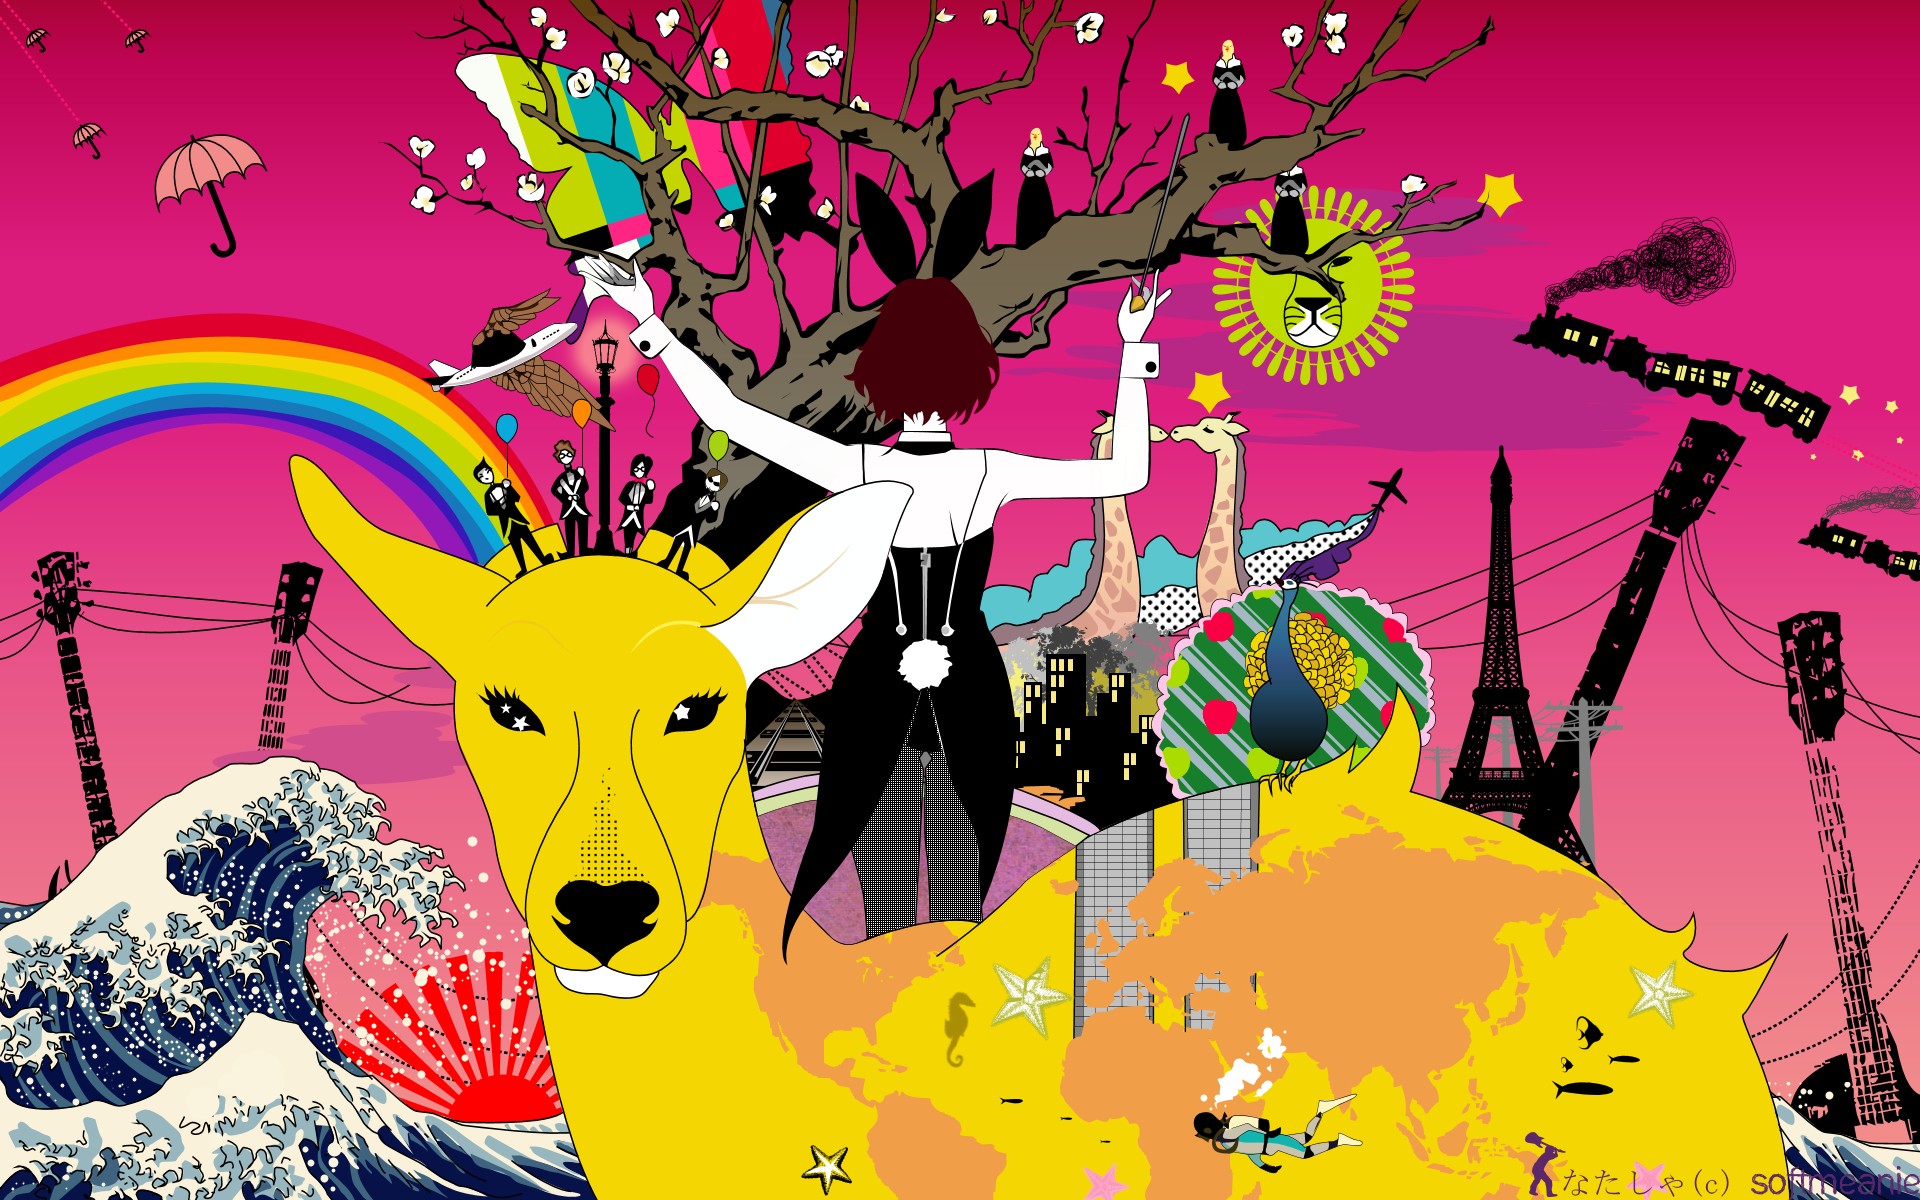 Anime 1920x1200 anime colorful original characters album covers anime girls deer animals umbrella trees arms up redhead waves train Eiffel Tower giraffes